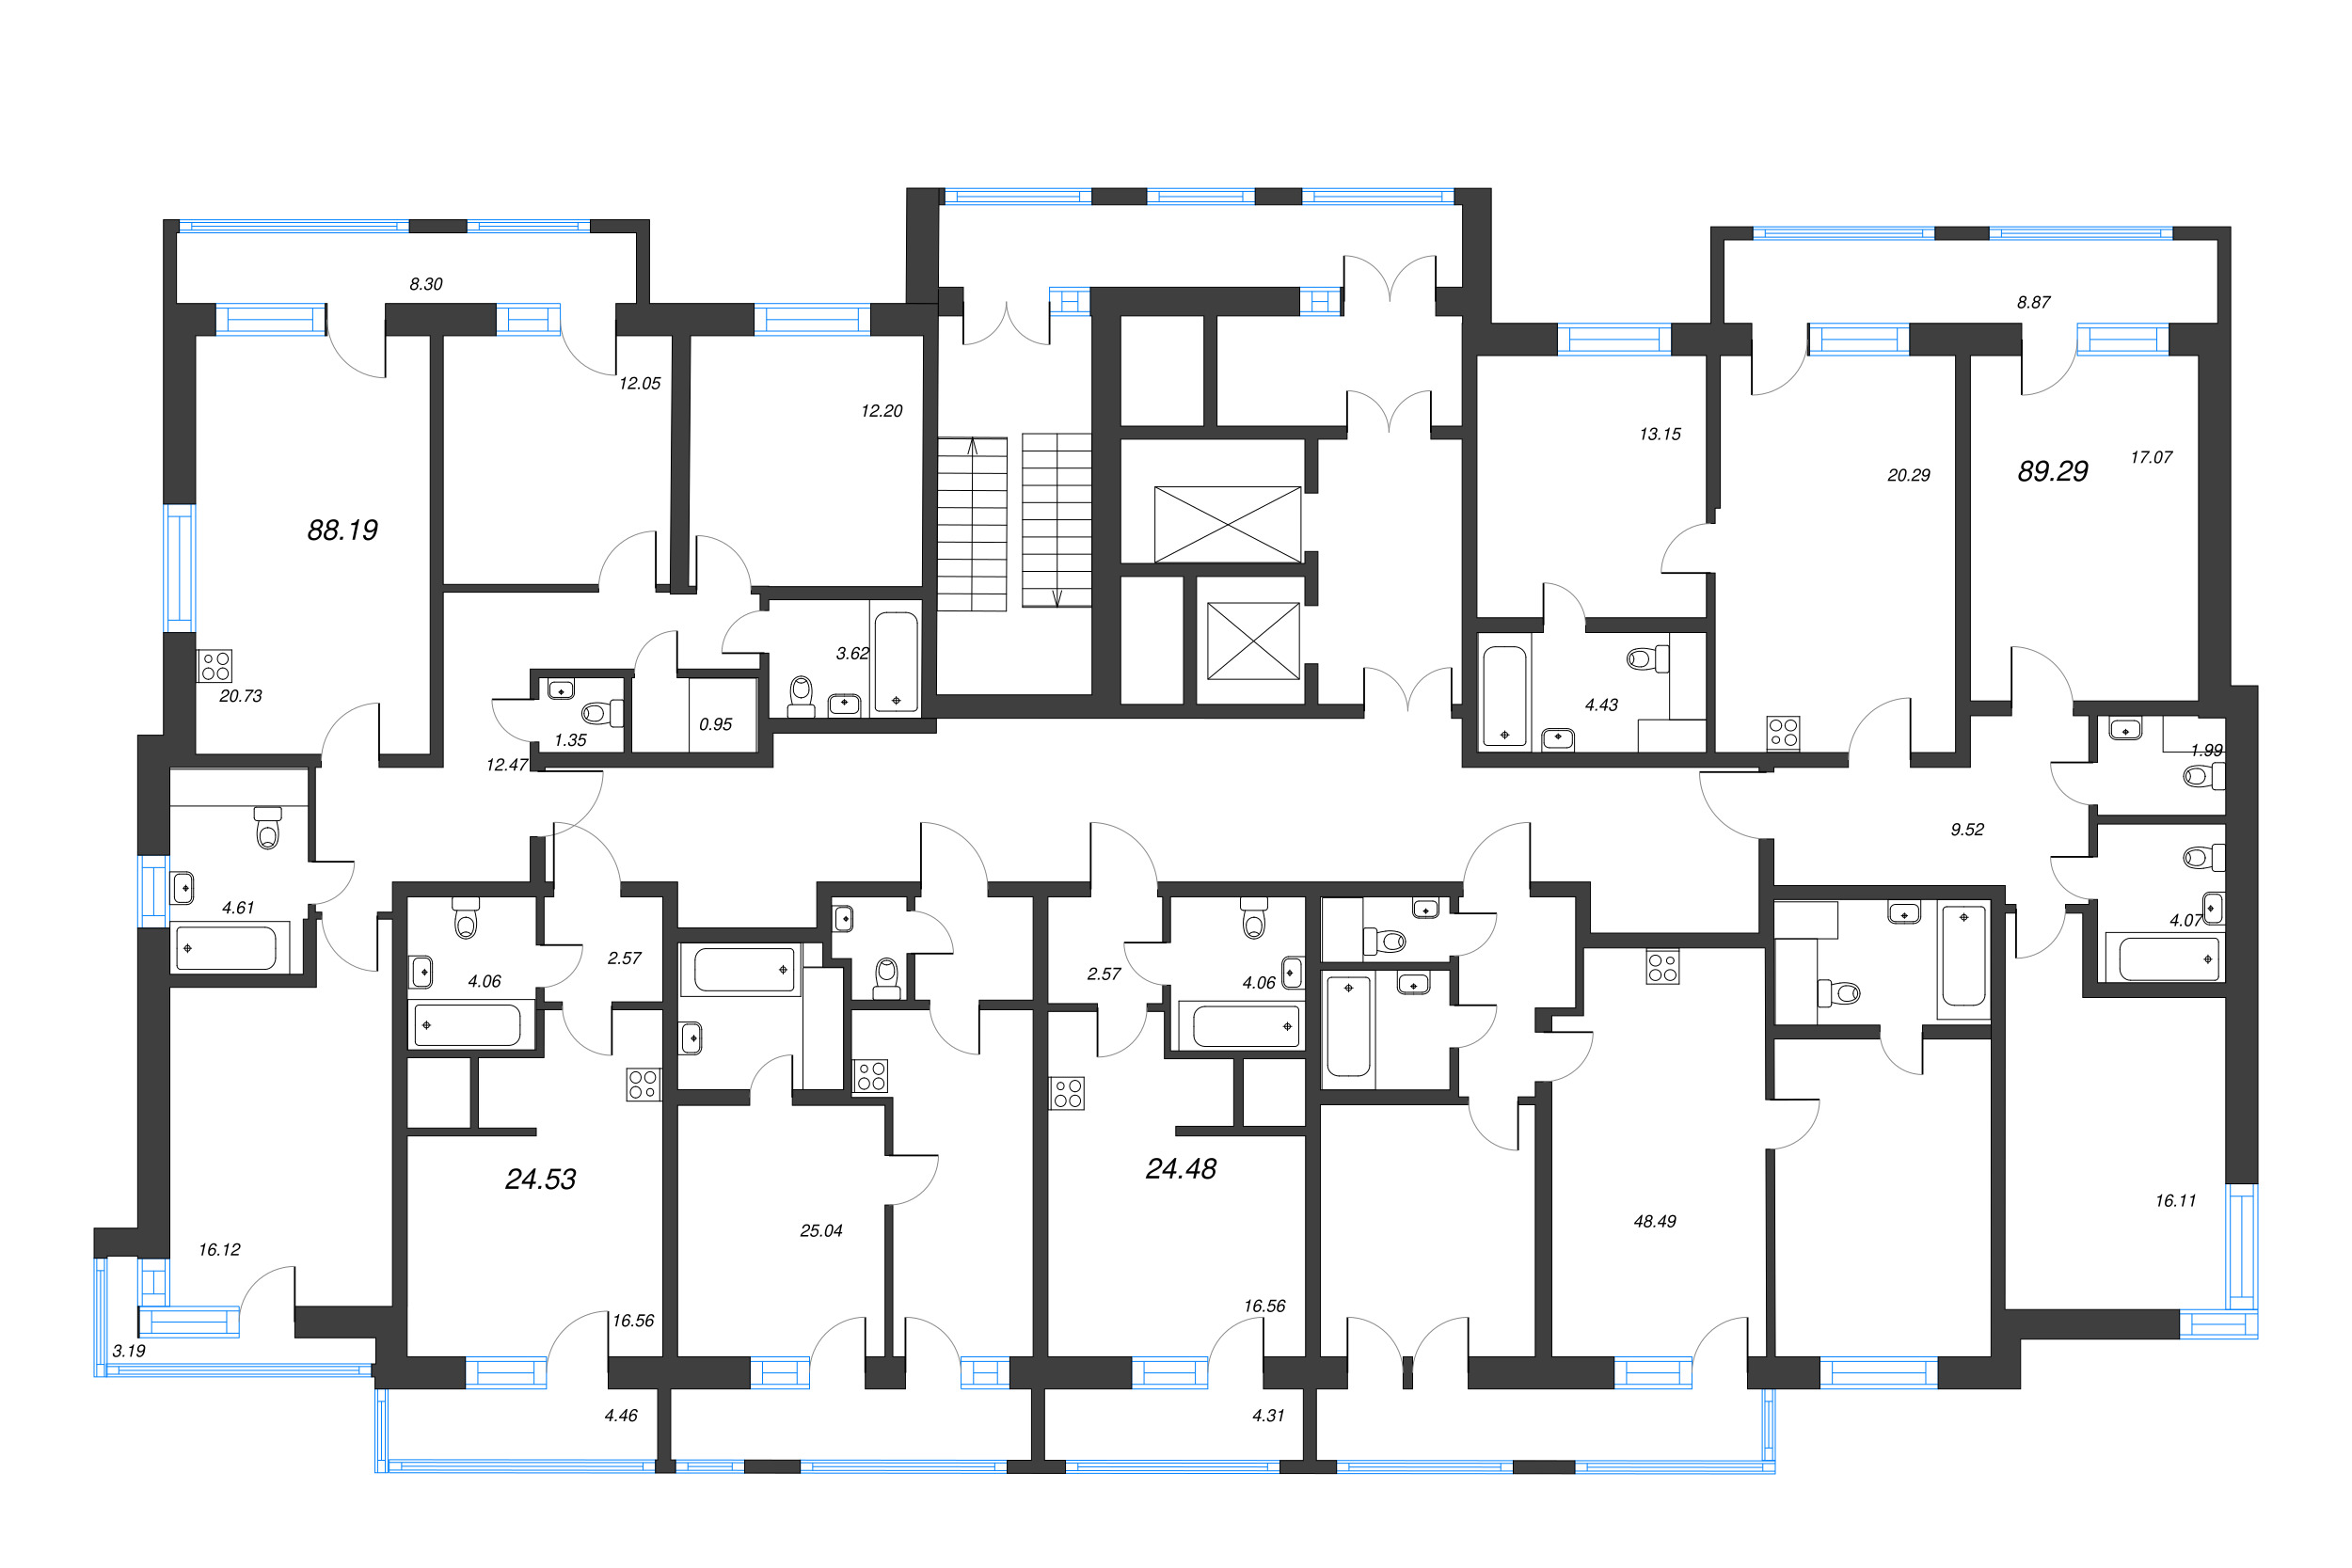 4-комнатная (Евро) квартира, 89.29 м² - планировка этажа